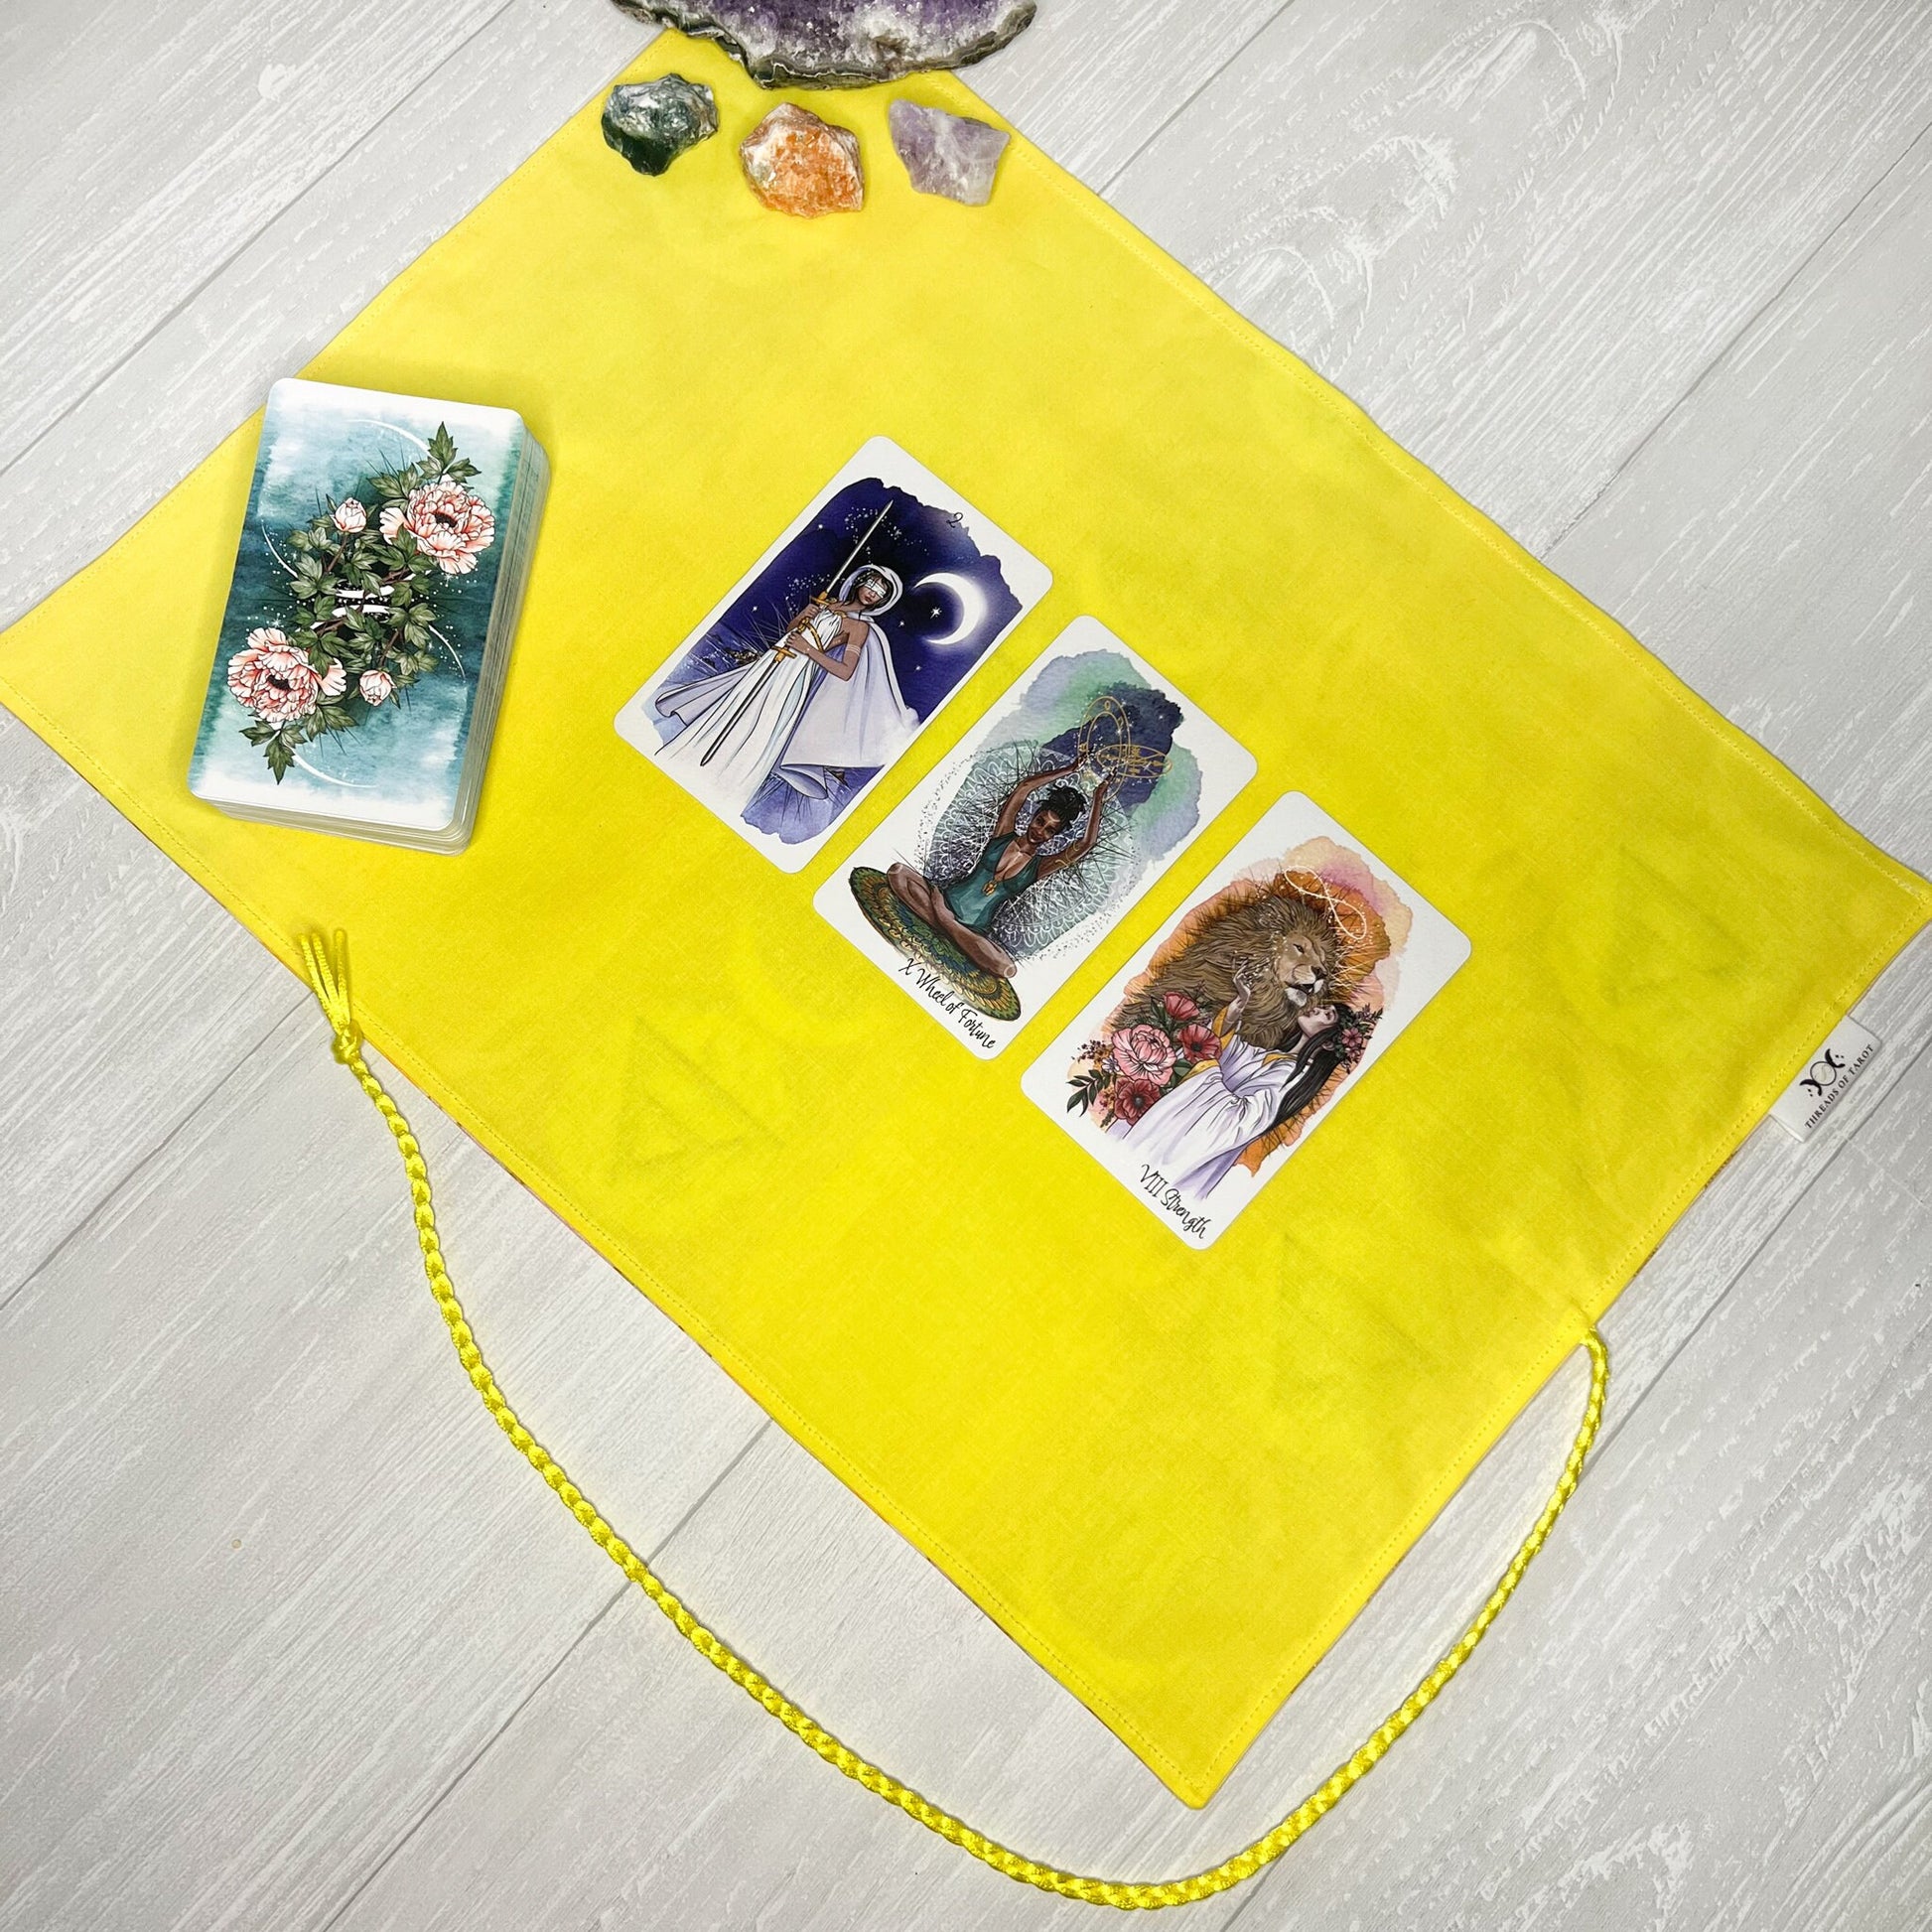 Air Symbol Tarot Wrap, Elemental Tarot Deck Storage Cloth, Tarot Card Holder, Pagan Witchcraft Wiccan Divination Supplies, Tarot Accessories